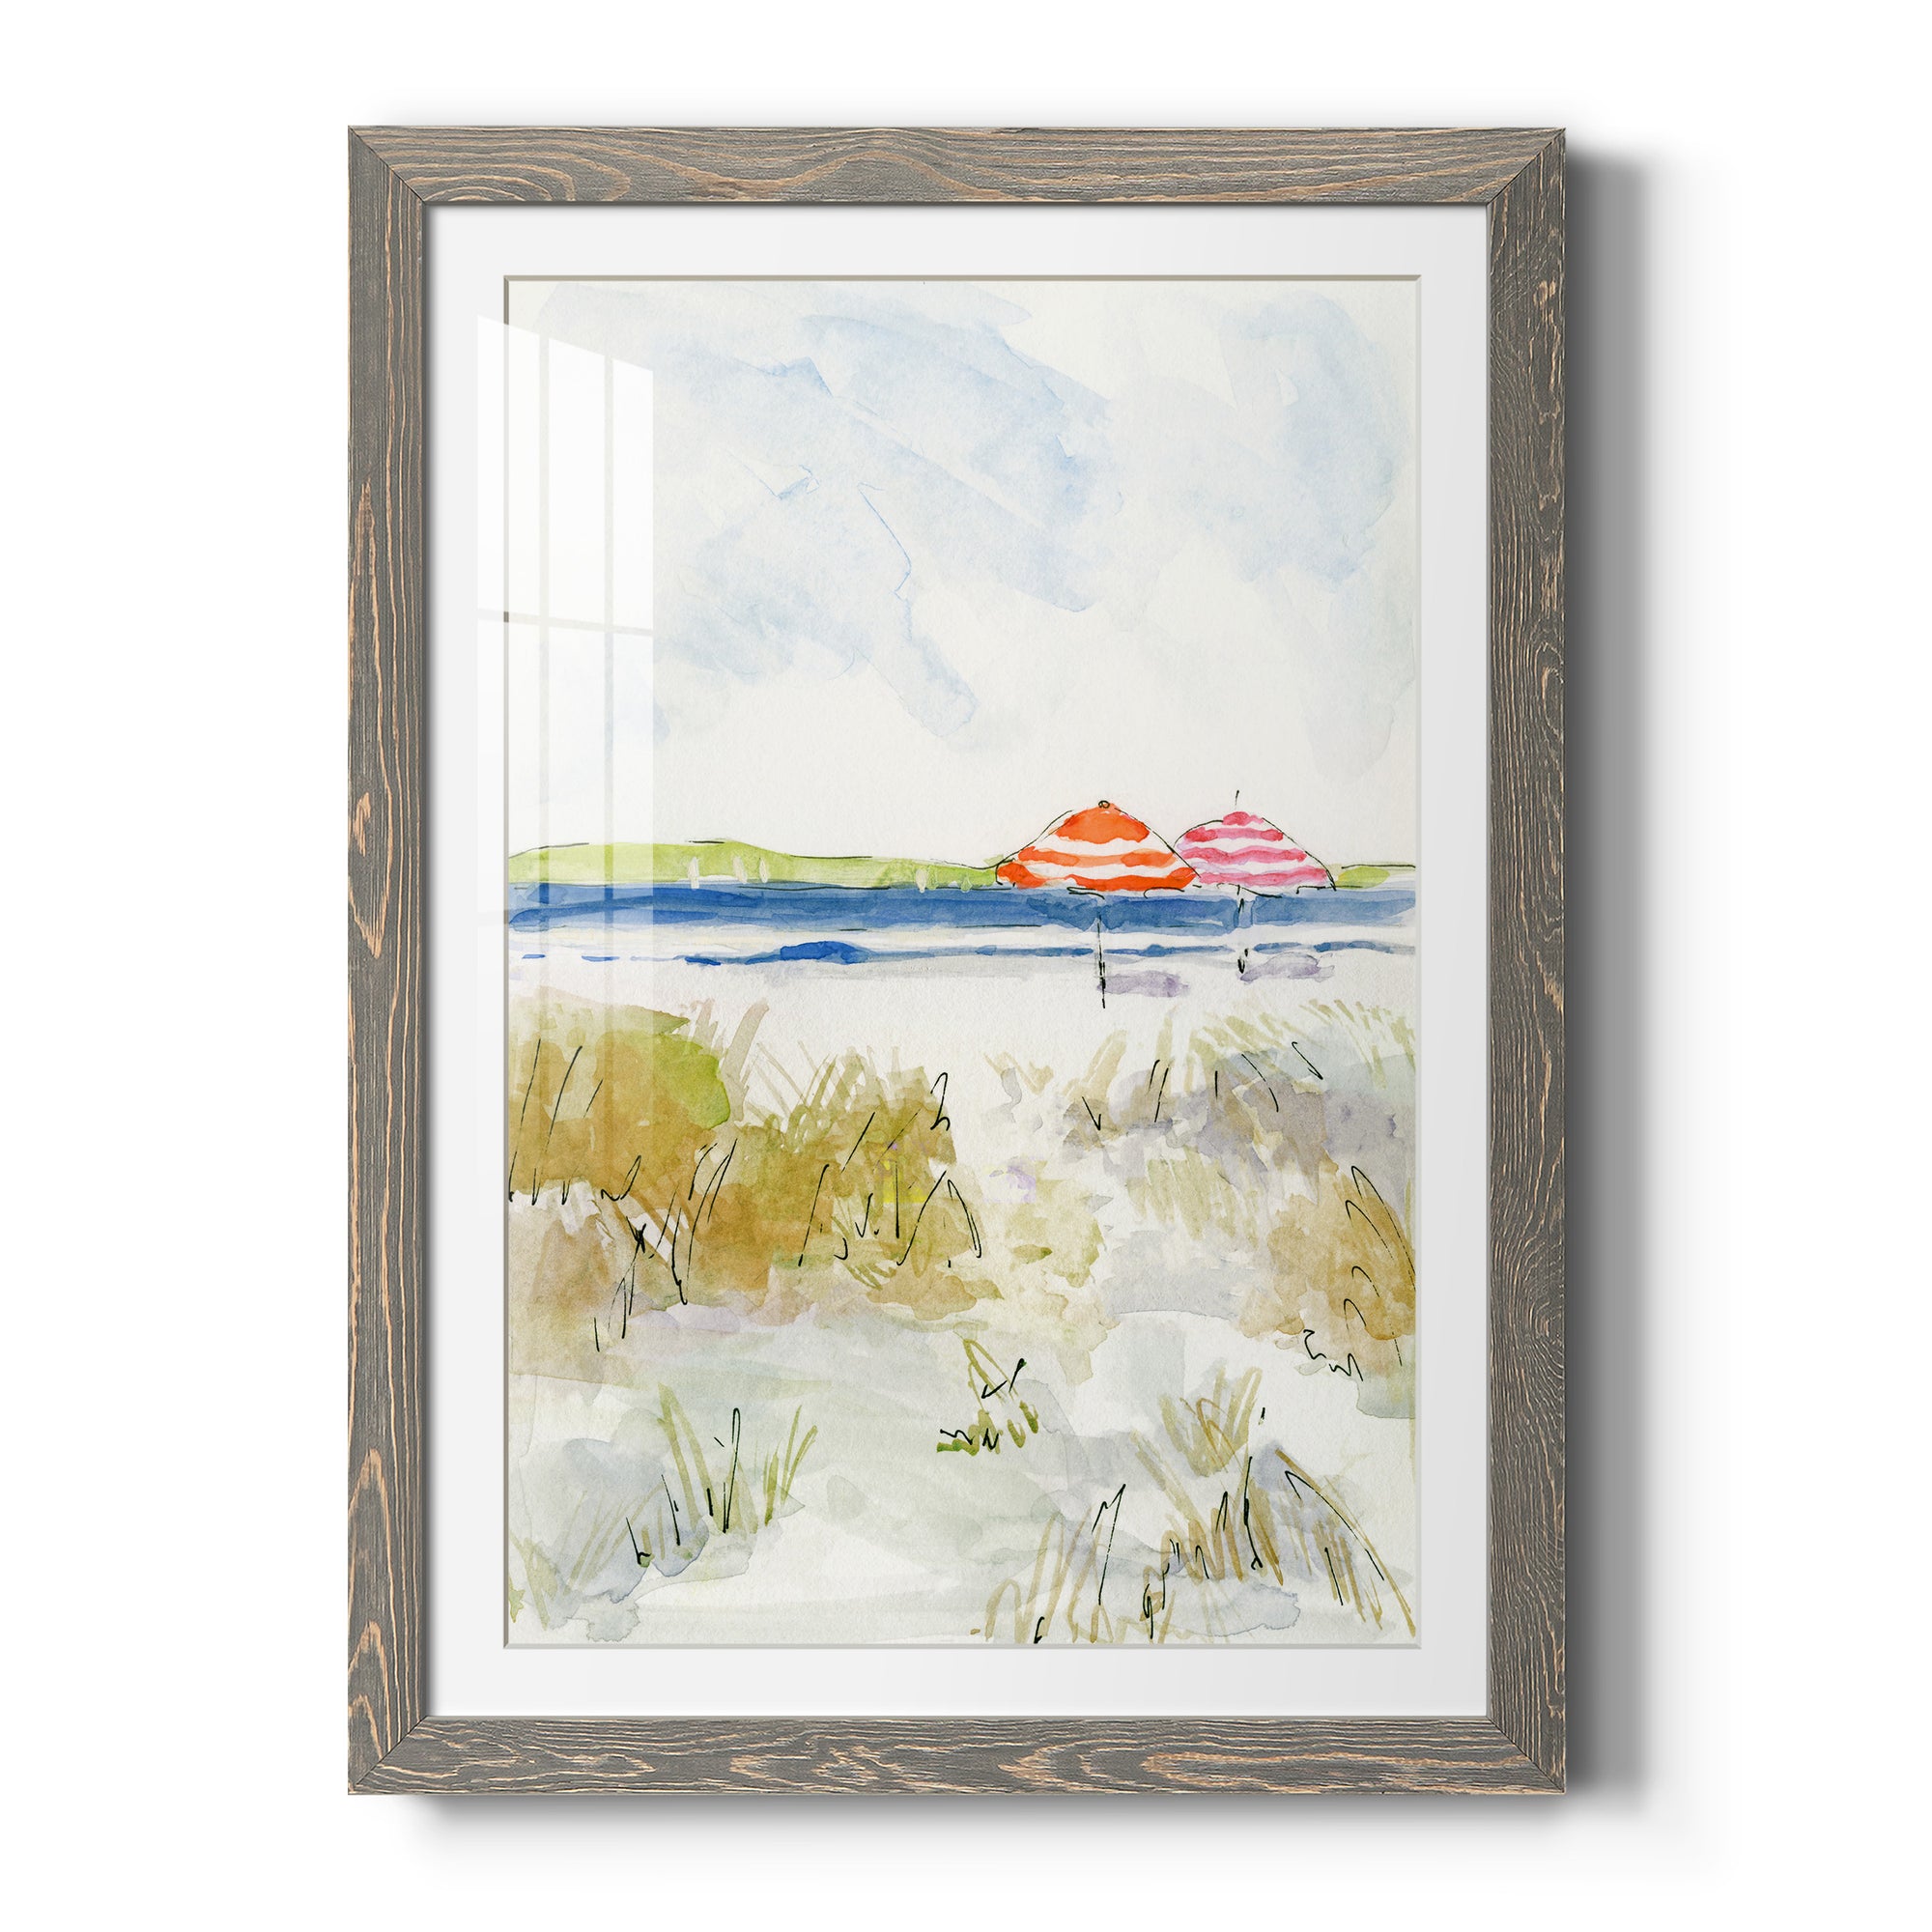 Sketchy Beach II - Premium Framed Print - Distressed Barnwood Frame - Ready to Hang